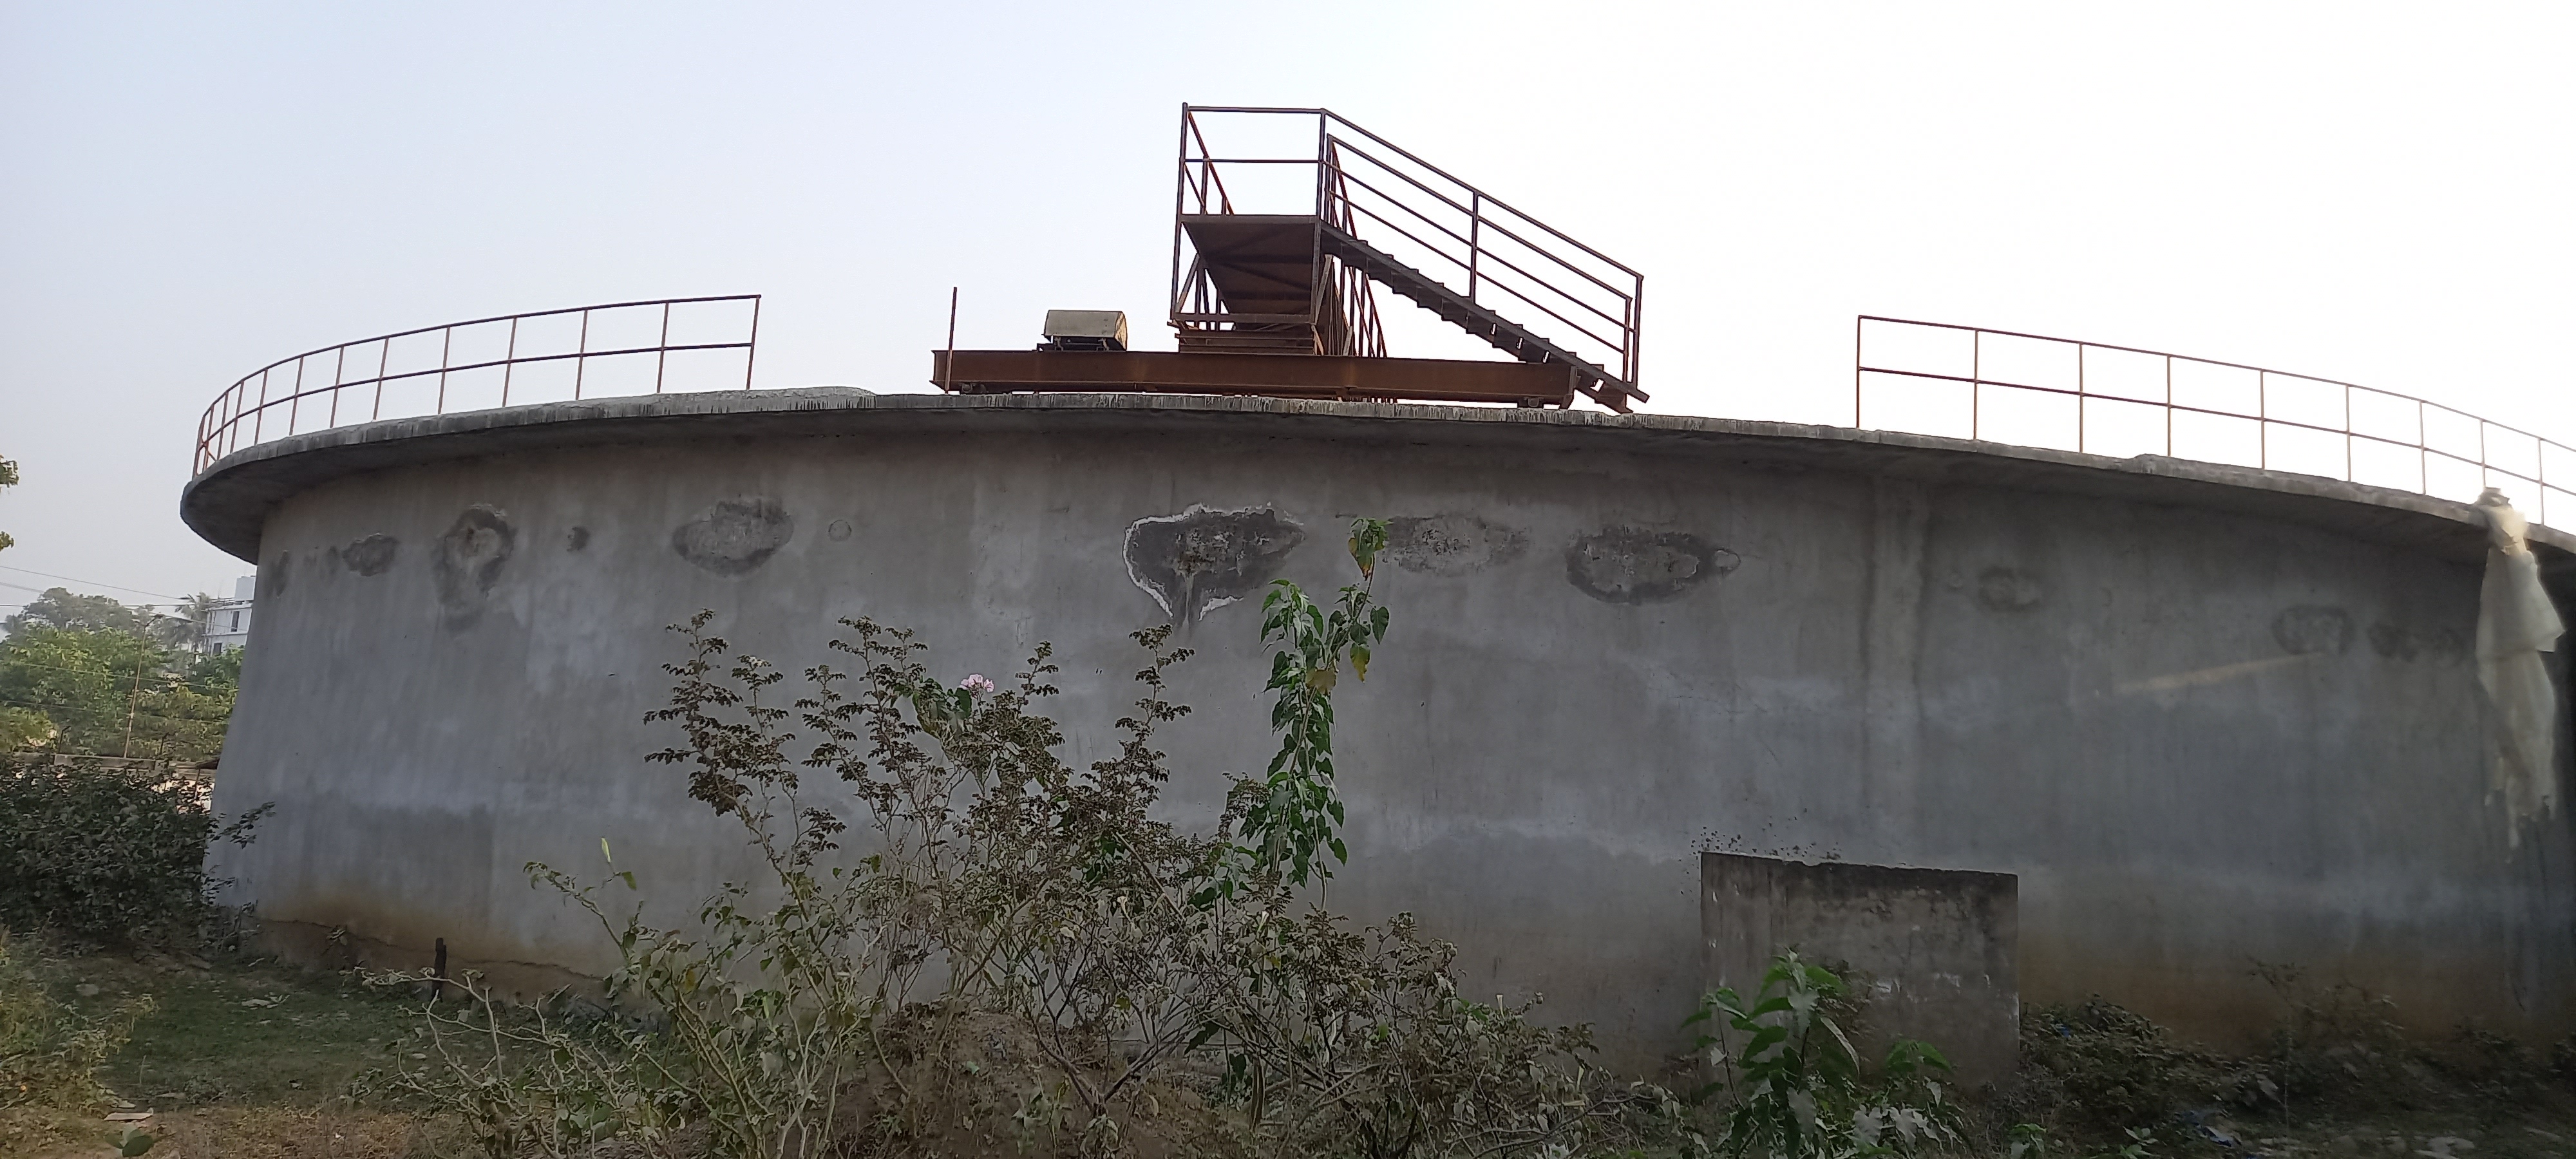 urban drinking water supply scheme not completed yet in Sahibganj